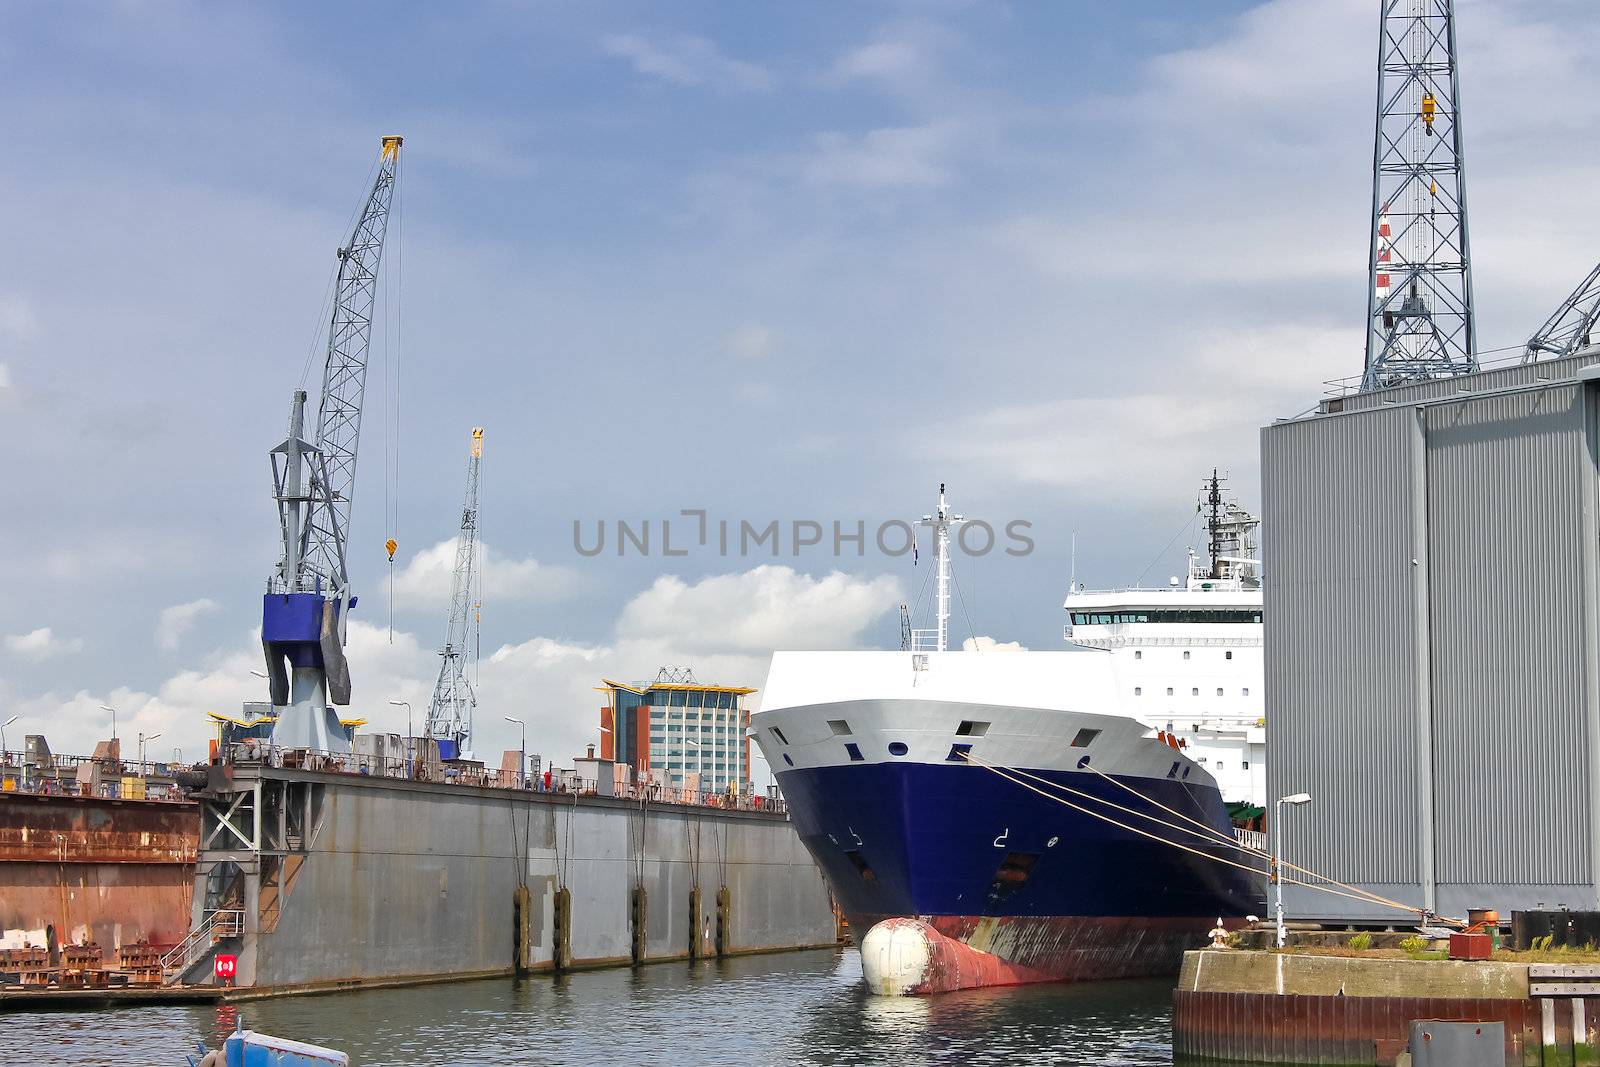 Industrial landscape. Ship and crane in shipyard